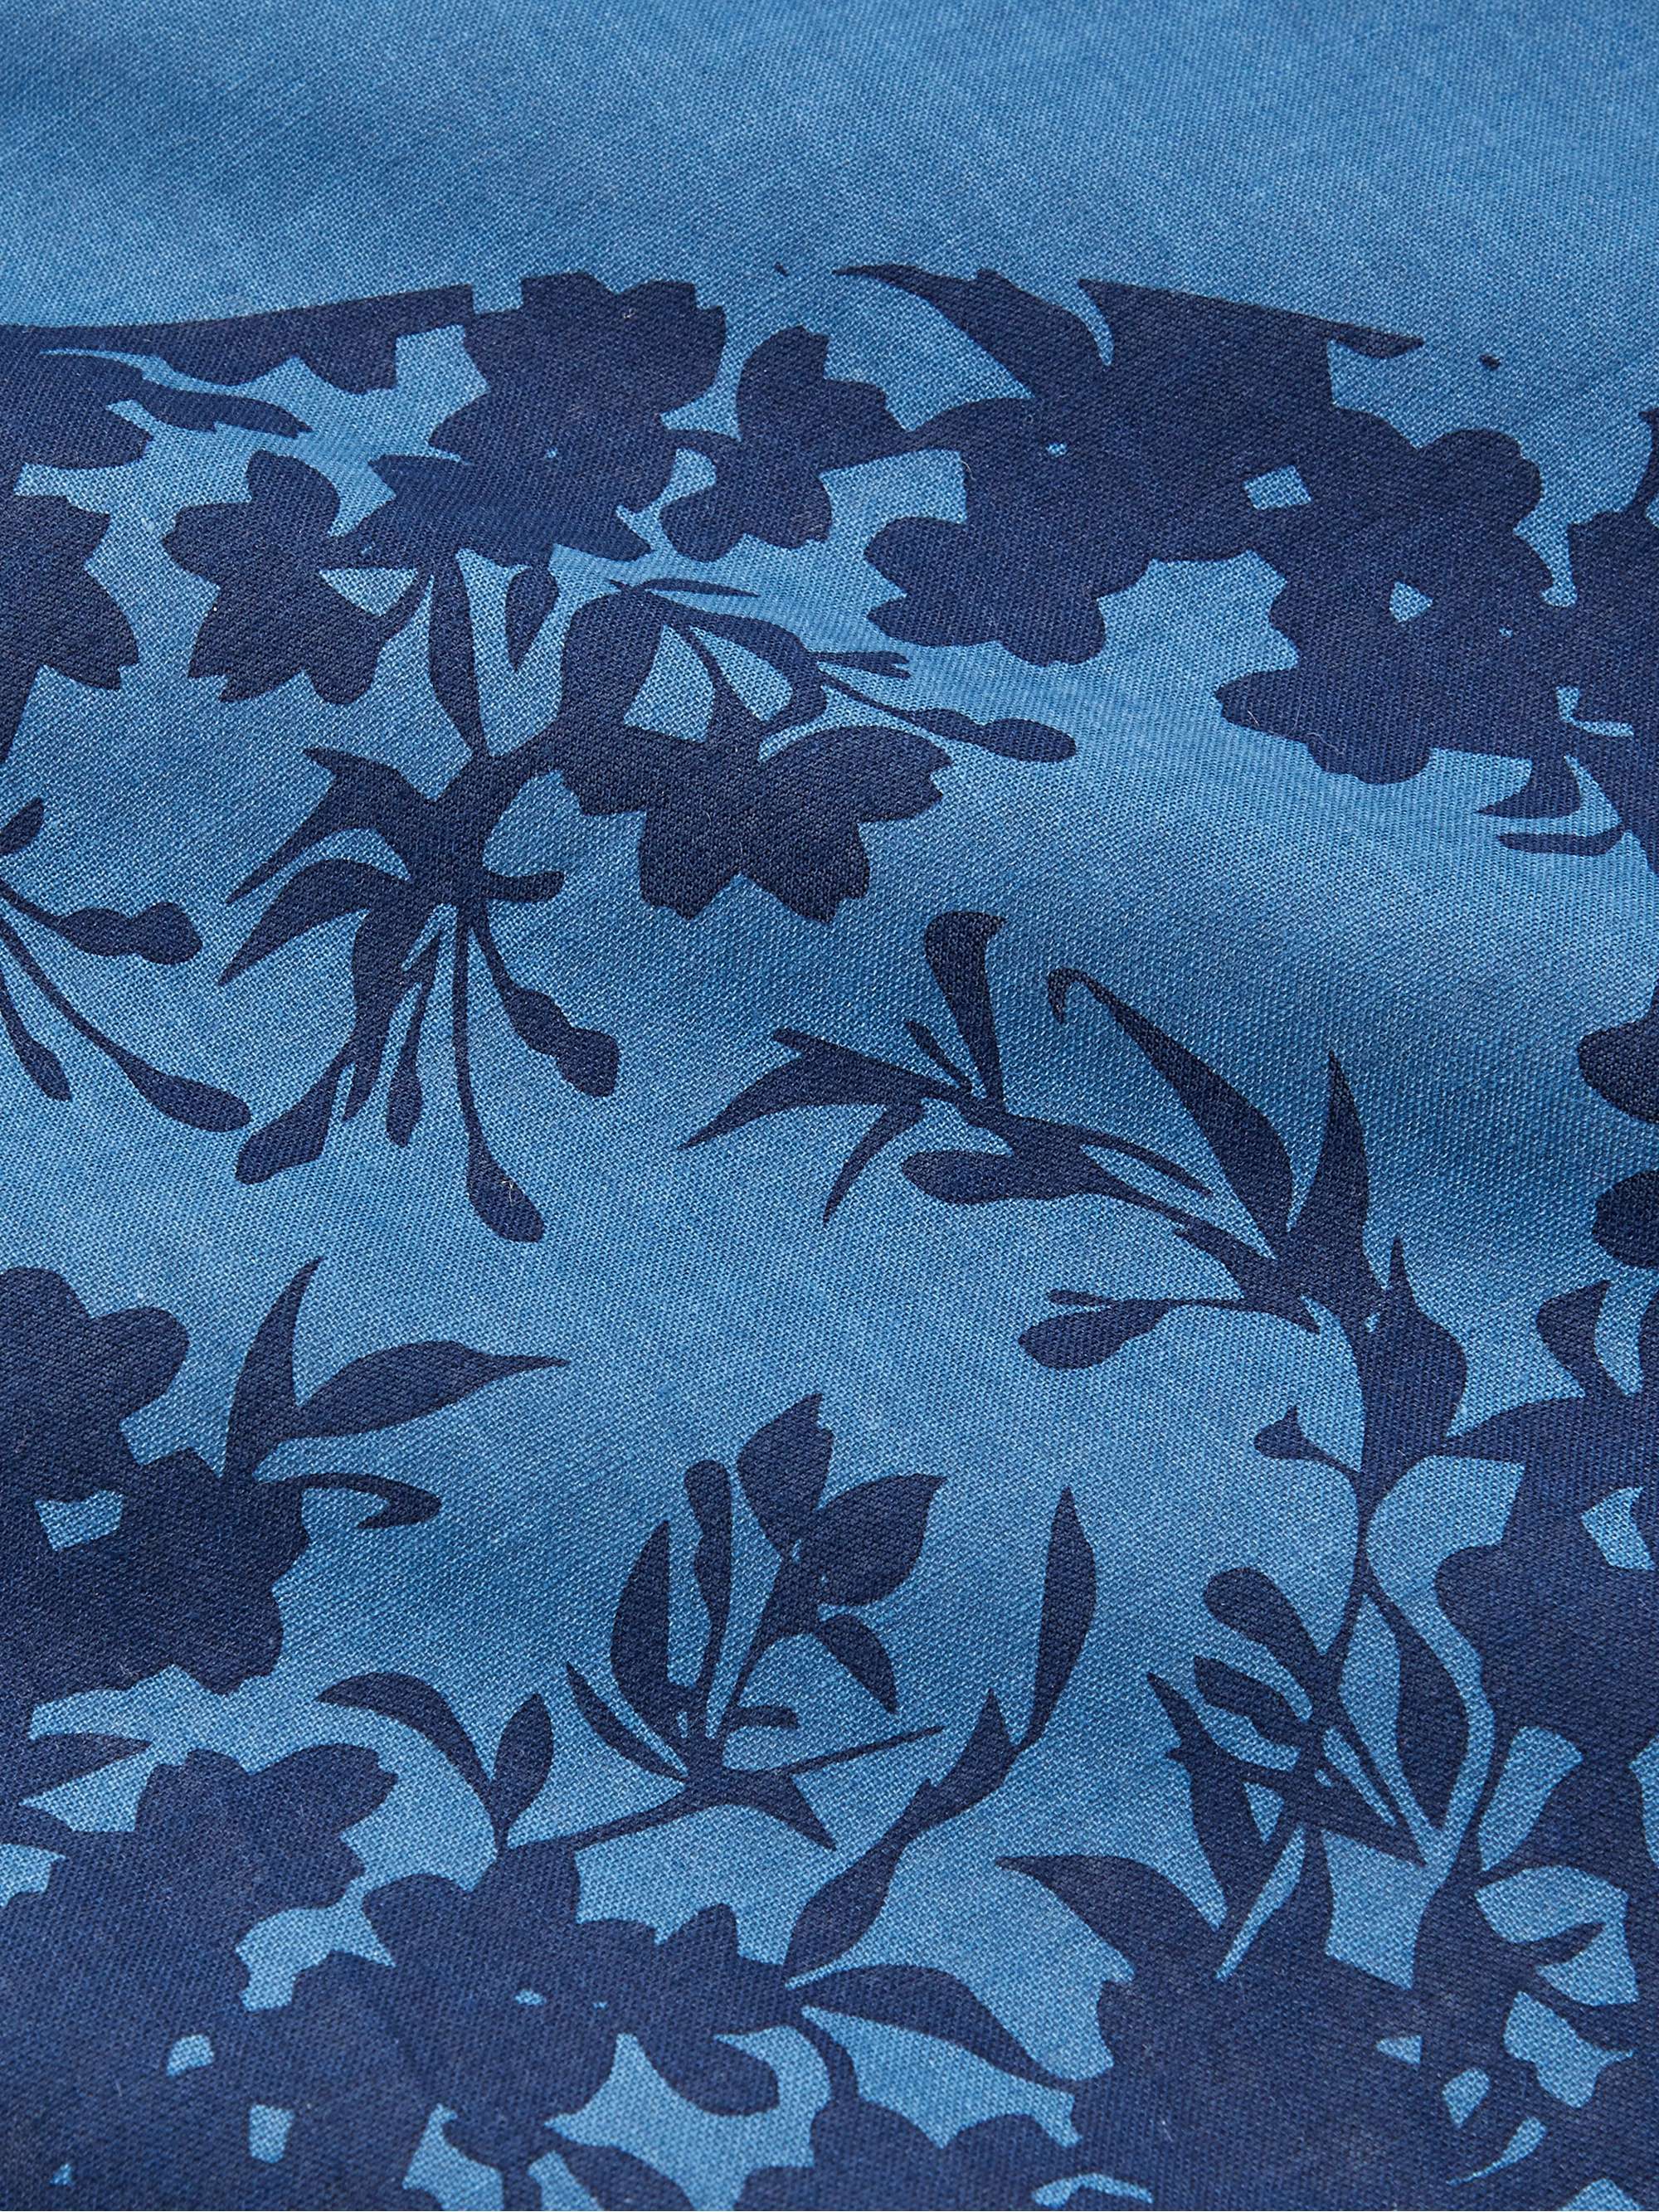 BLUE BLUE JAPAN Maru Mado Printed Cotton-Voile Bandana